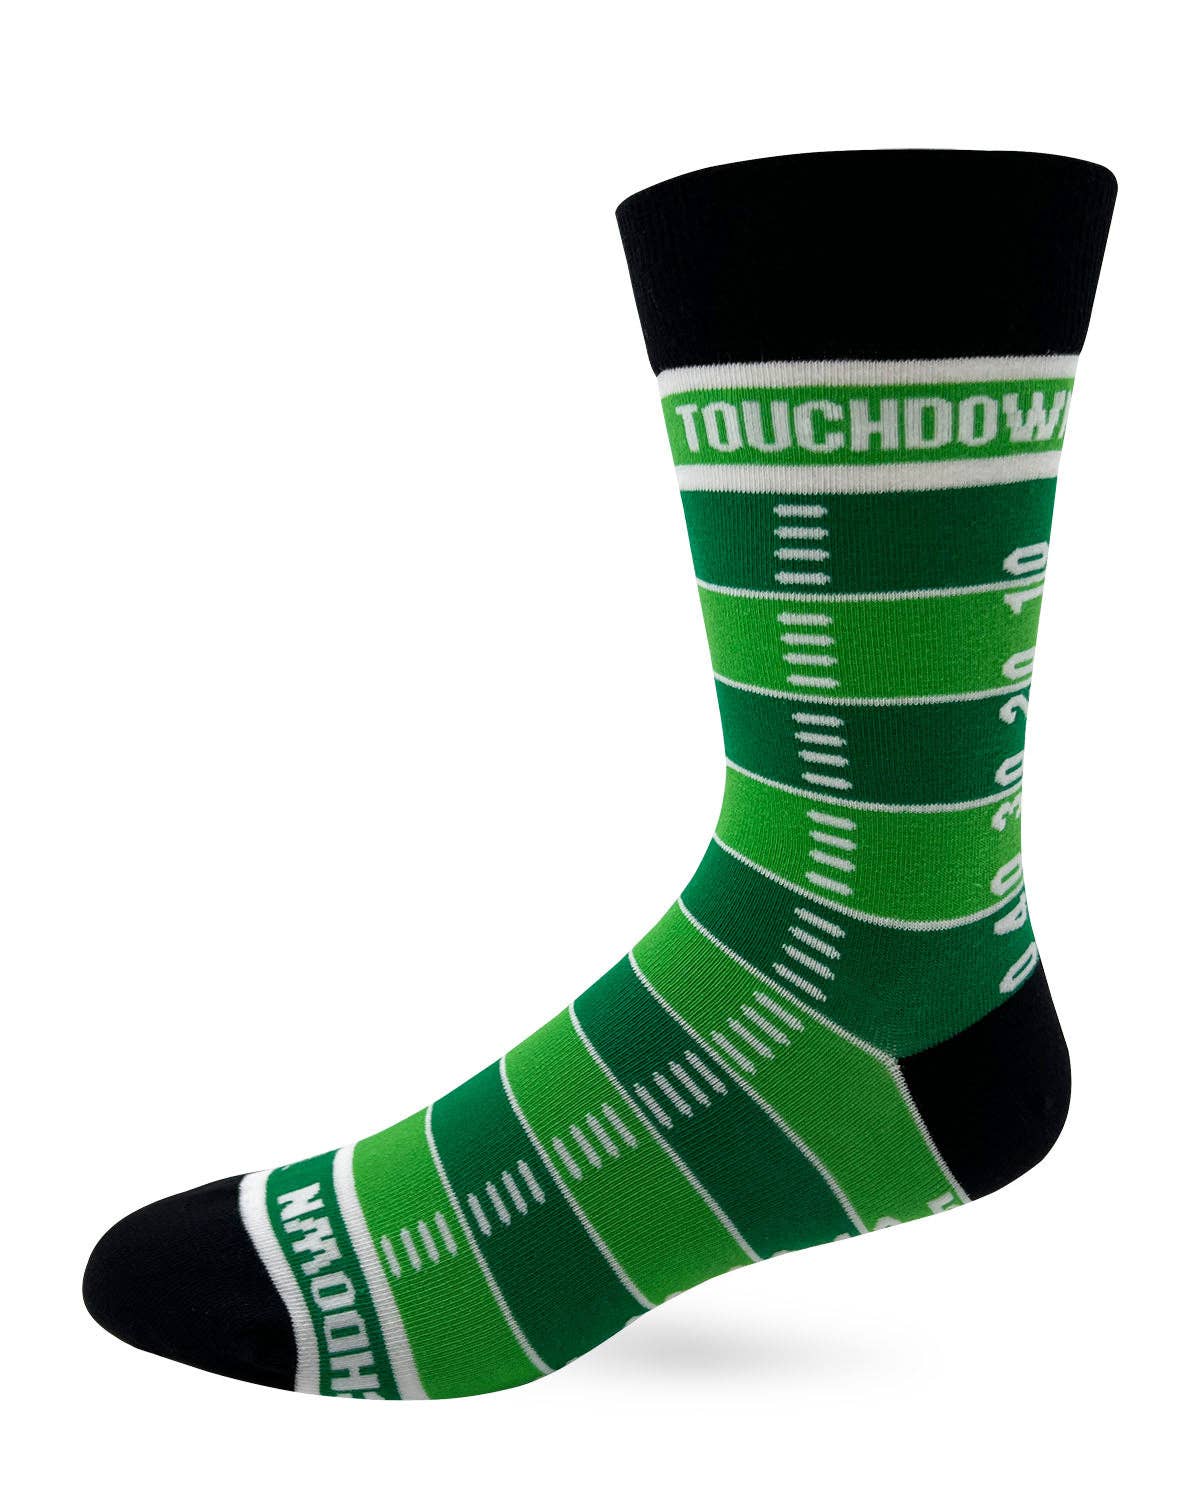 Touchdown Men's Novelty Crew Socks Featuring American Football Field